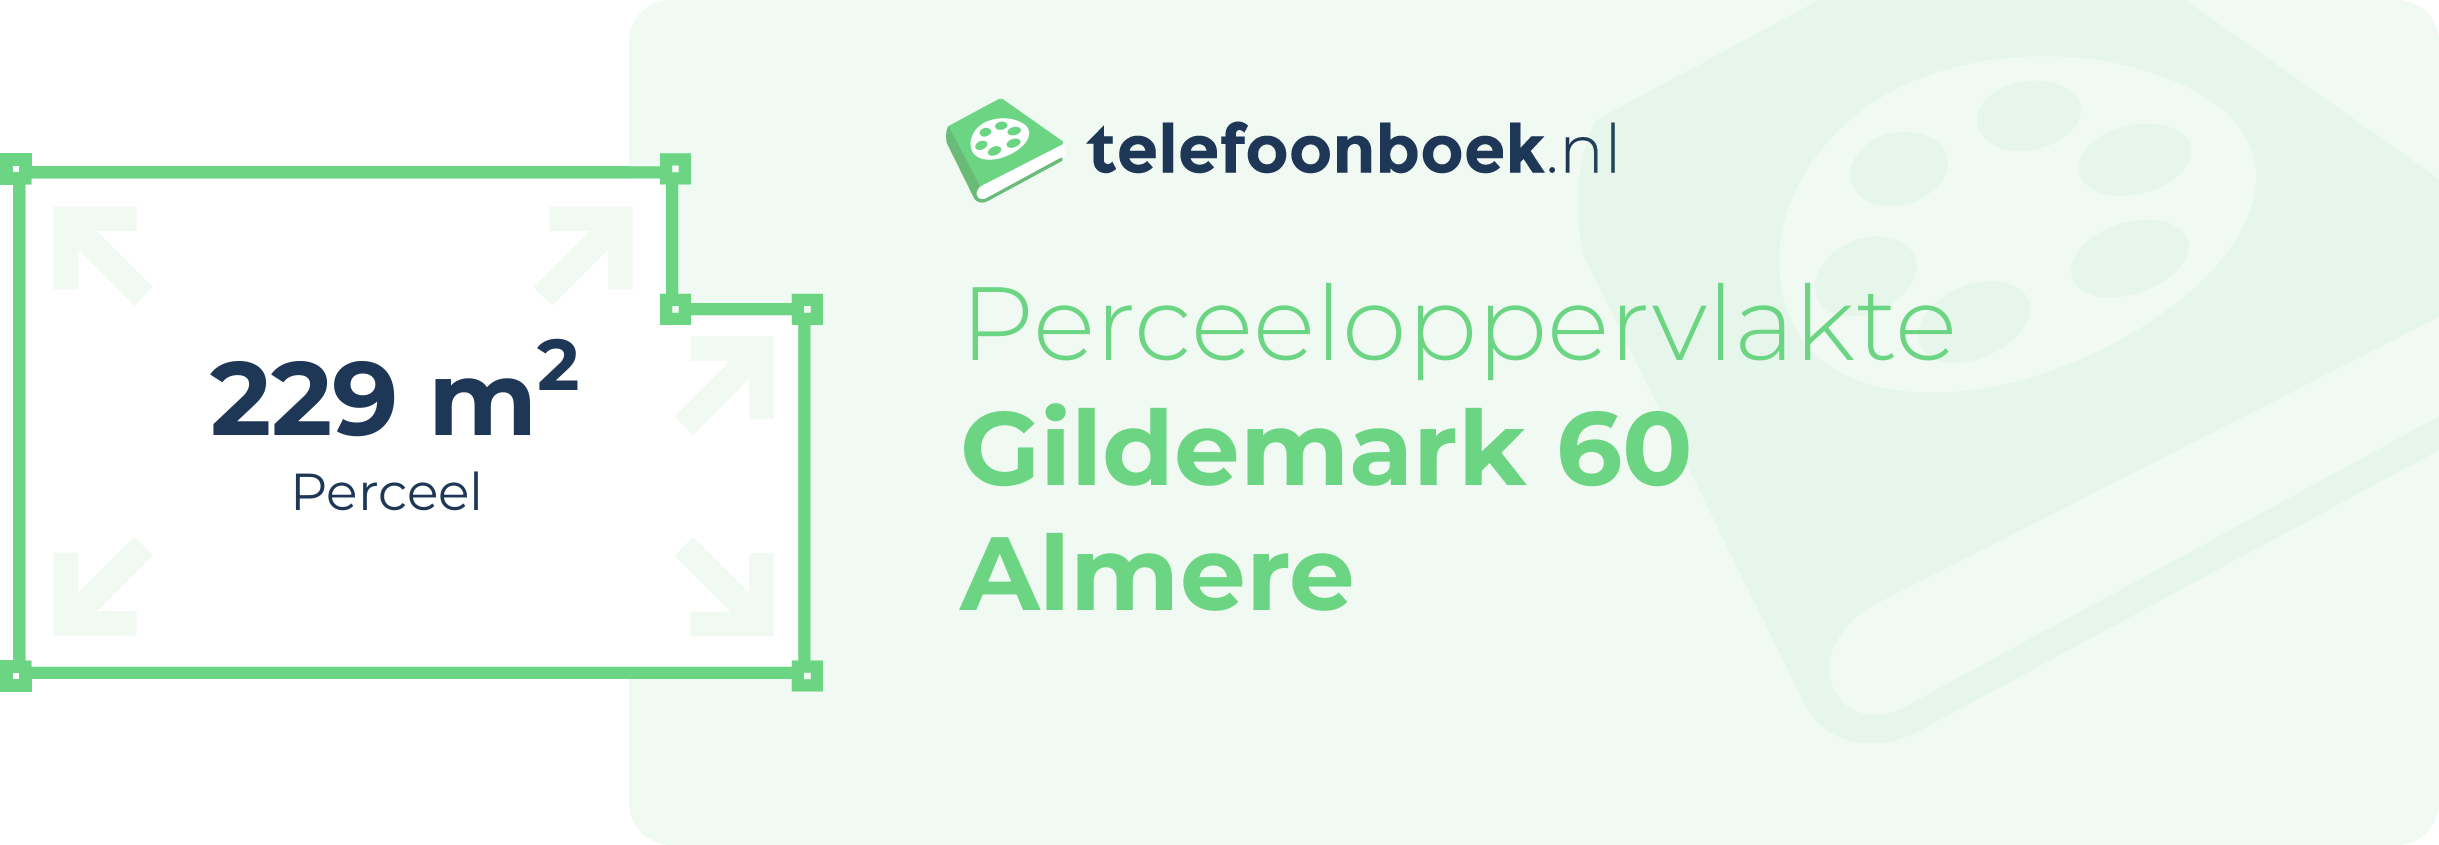 Perceeloppervlakte Gildemark 60 Almere